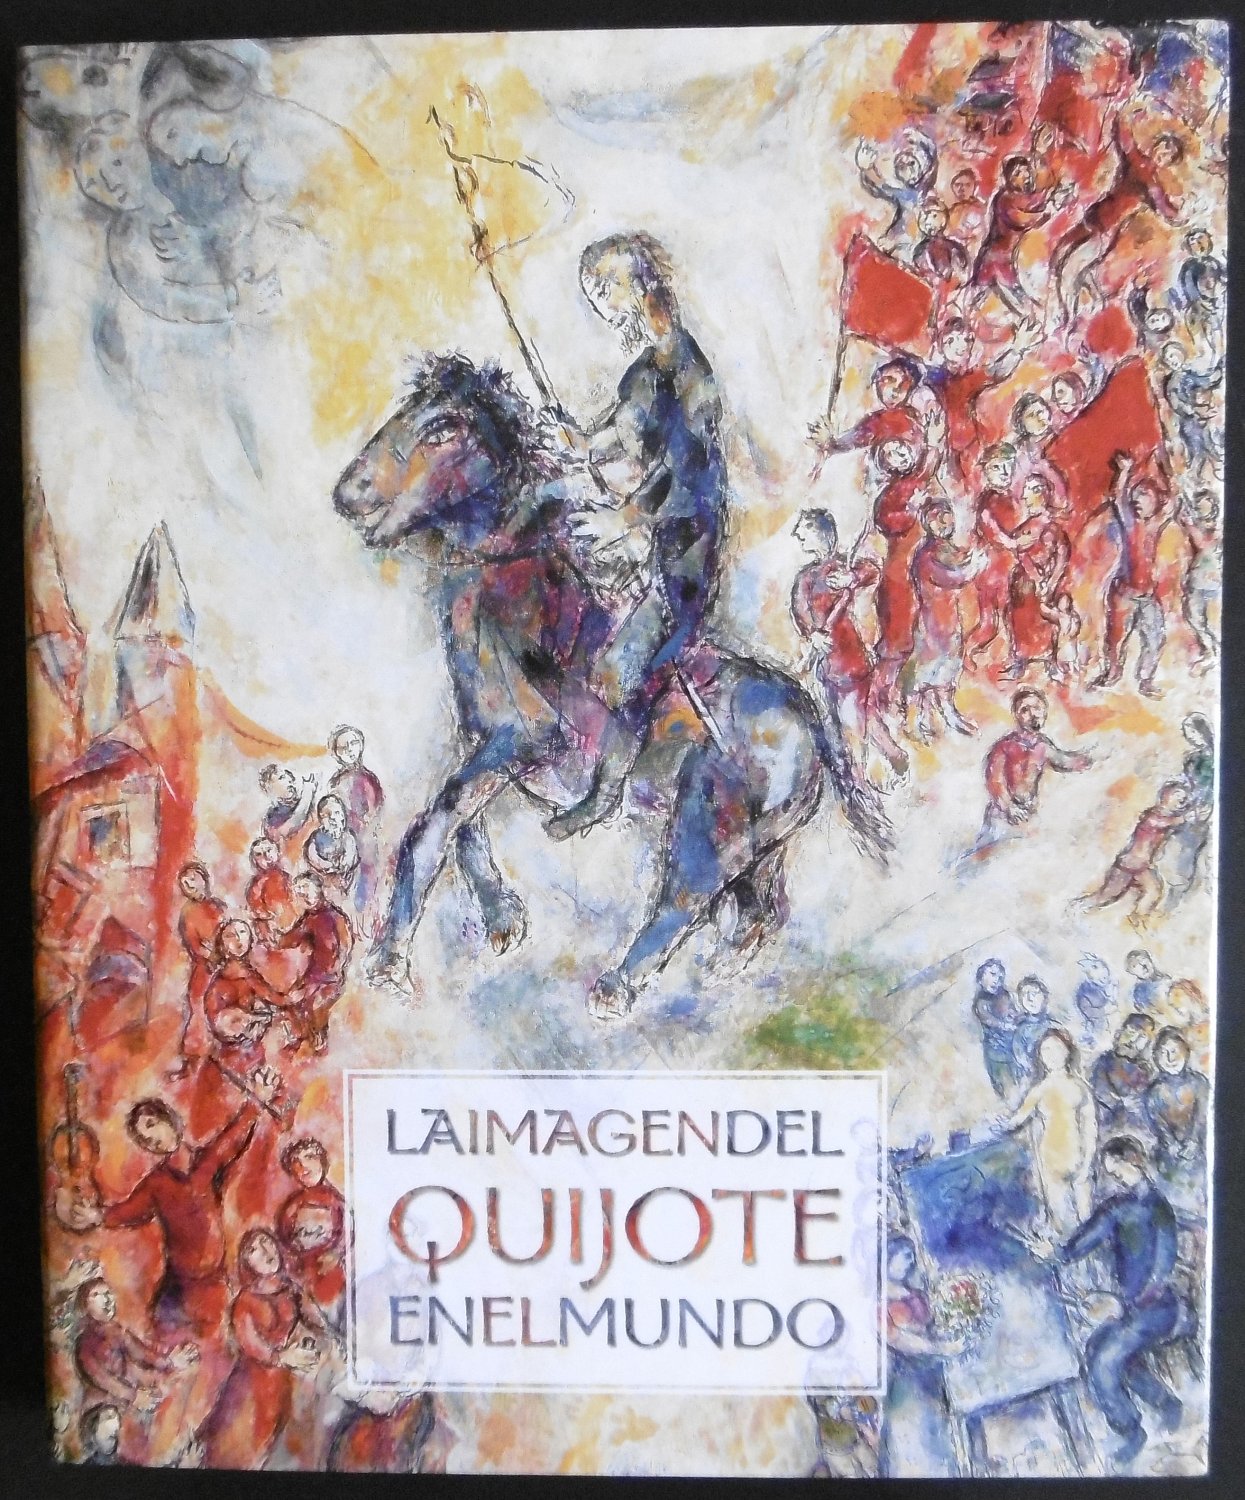 Laimagendel Quijote Enelmundo. [La imagen del Quijote en el mundo]. Fotografìas: Joaquín Cortés. [Englische Zusammenfassung im Anhang].